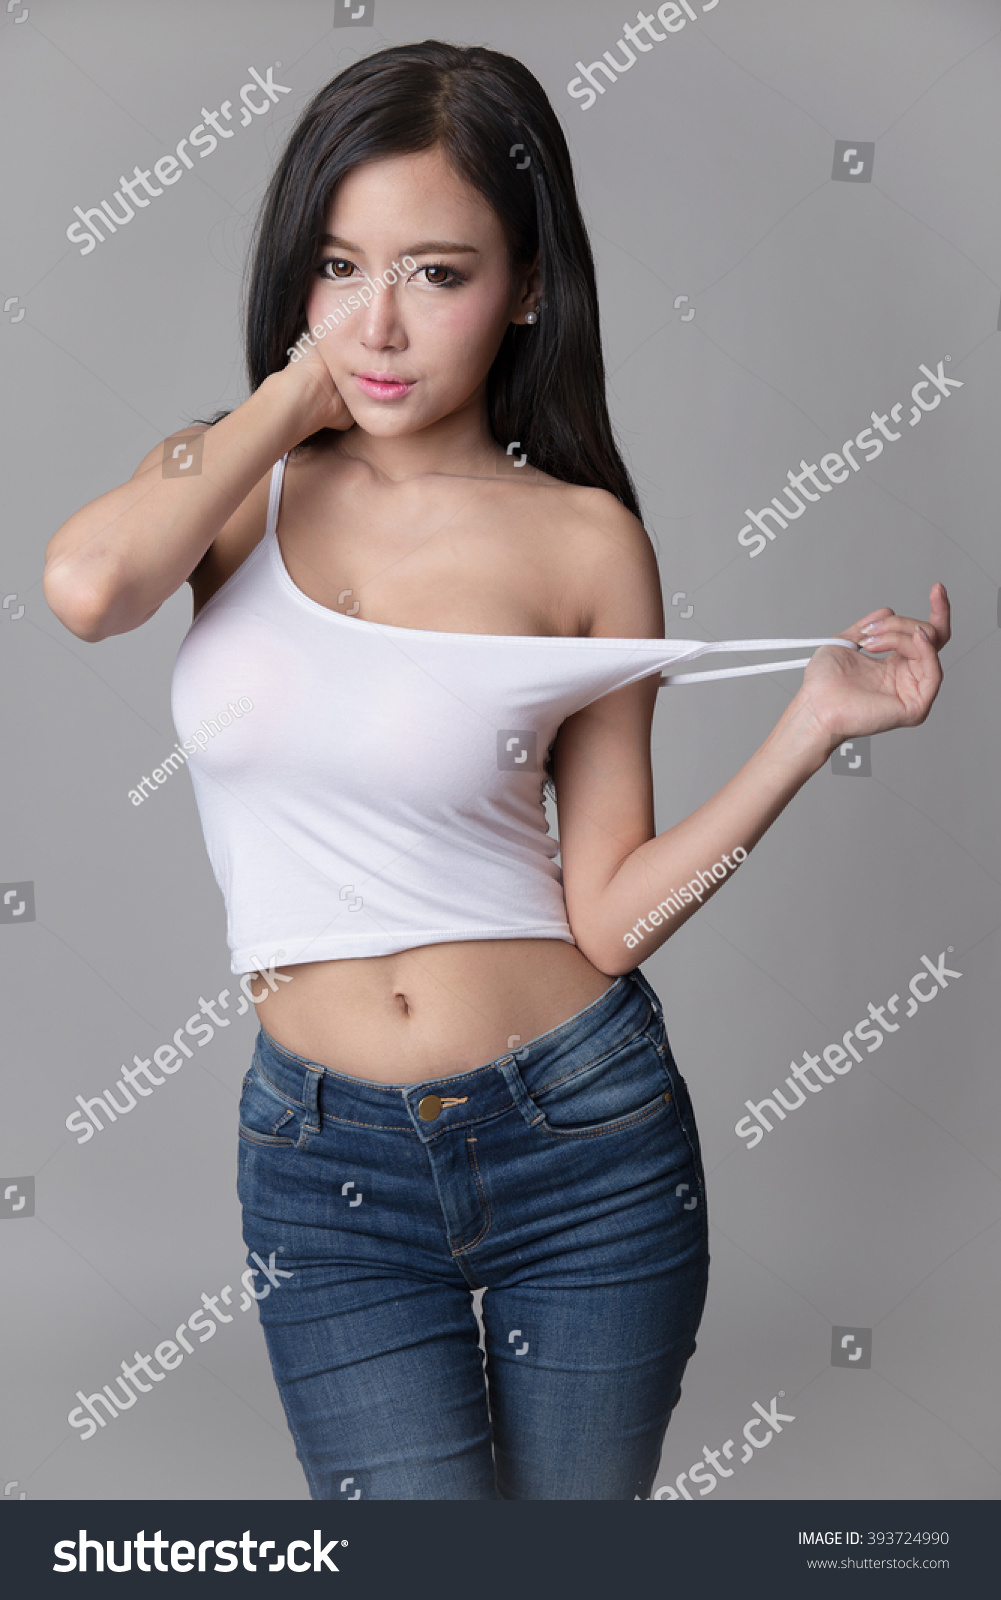 Hot asian woman